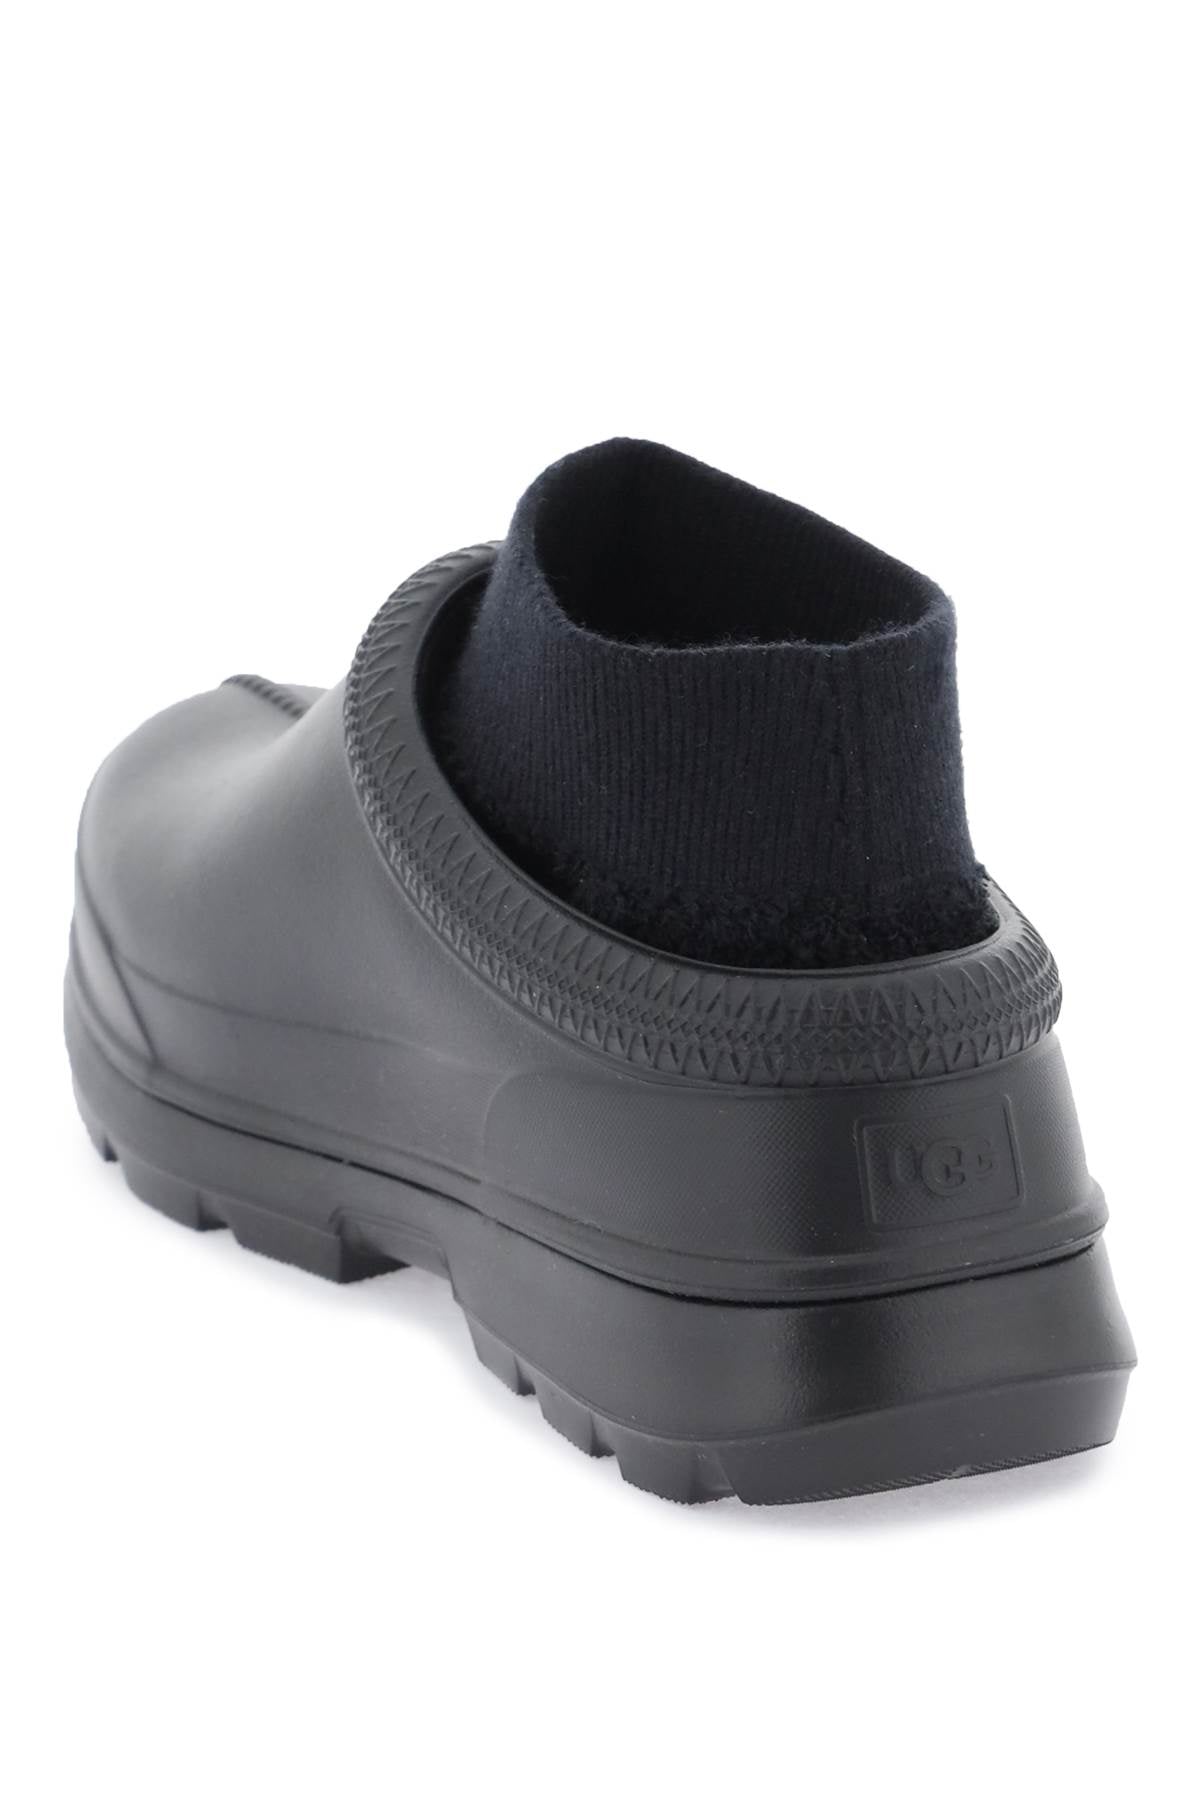 Ugg tasman x slip-on shoes